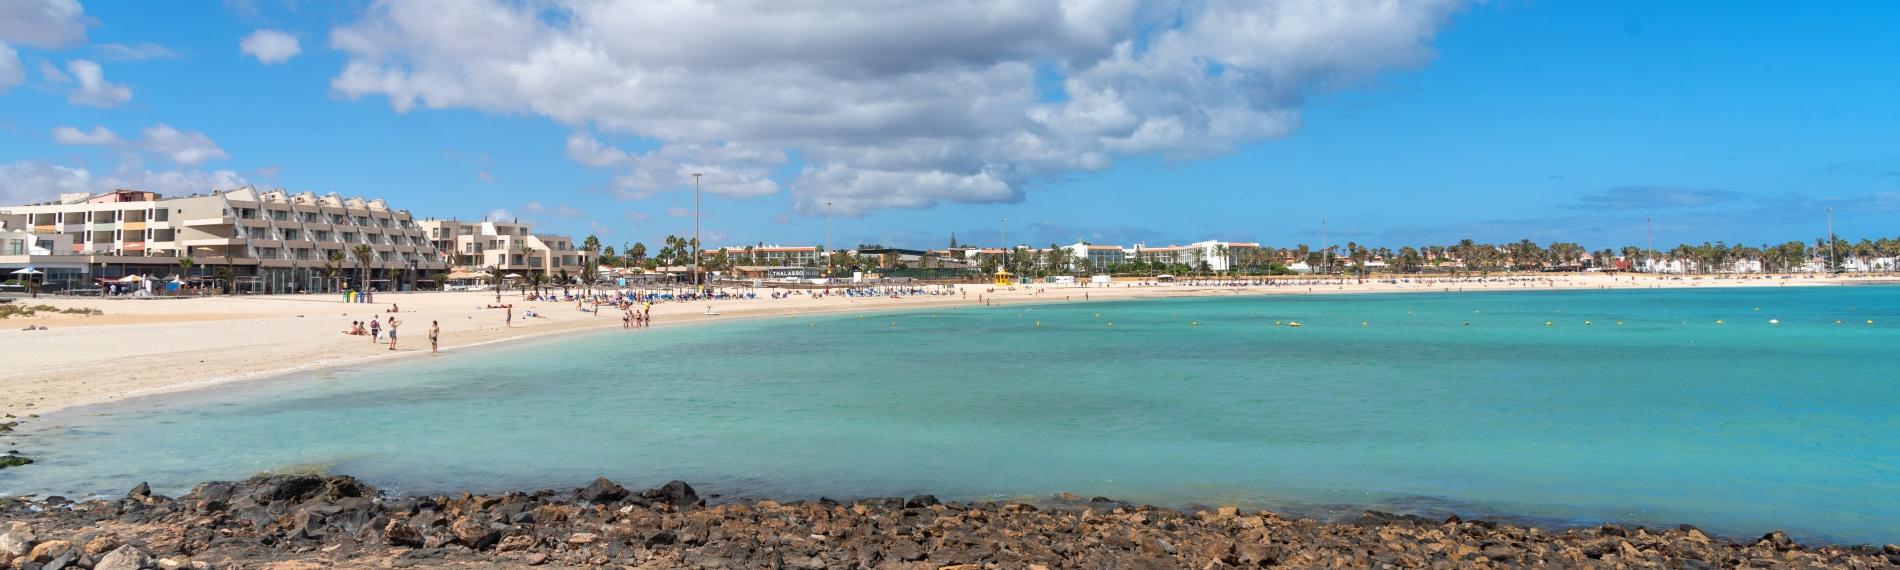 The idyllic white sand and blue sea of popular Caleta de Fuste Beach in Fuerteventura